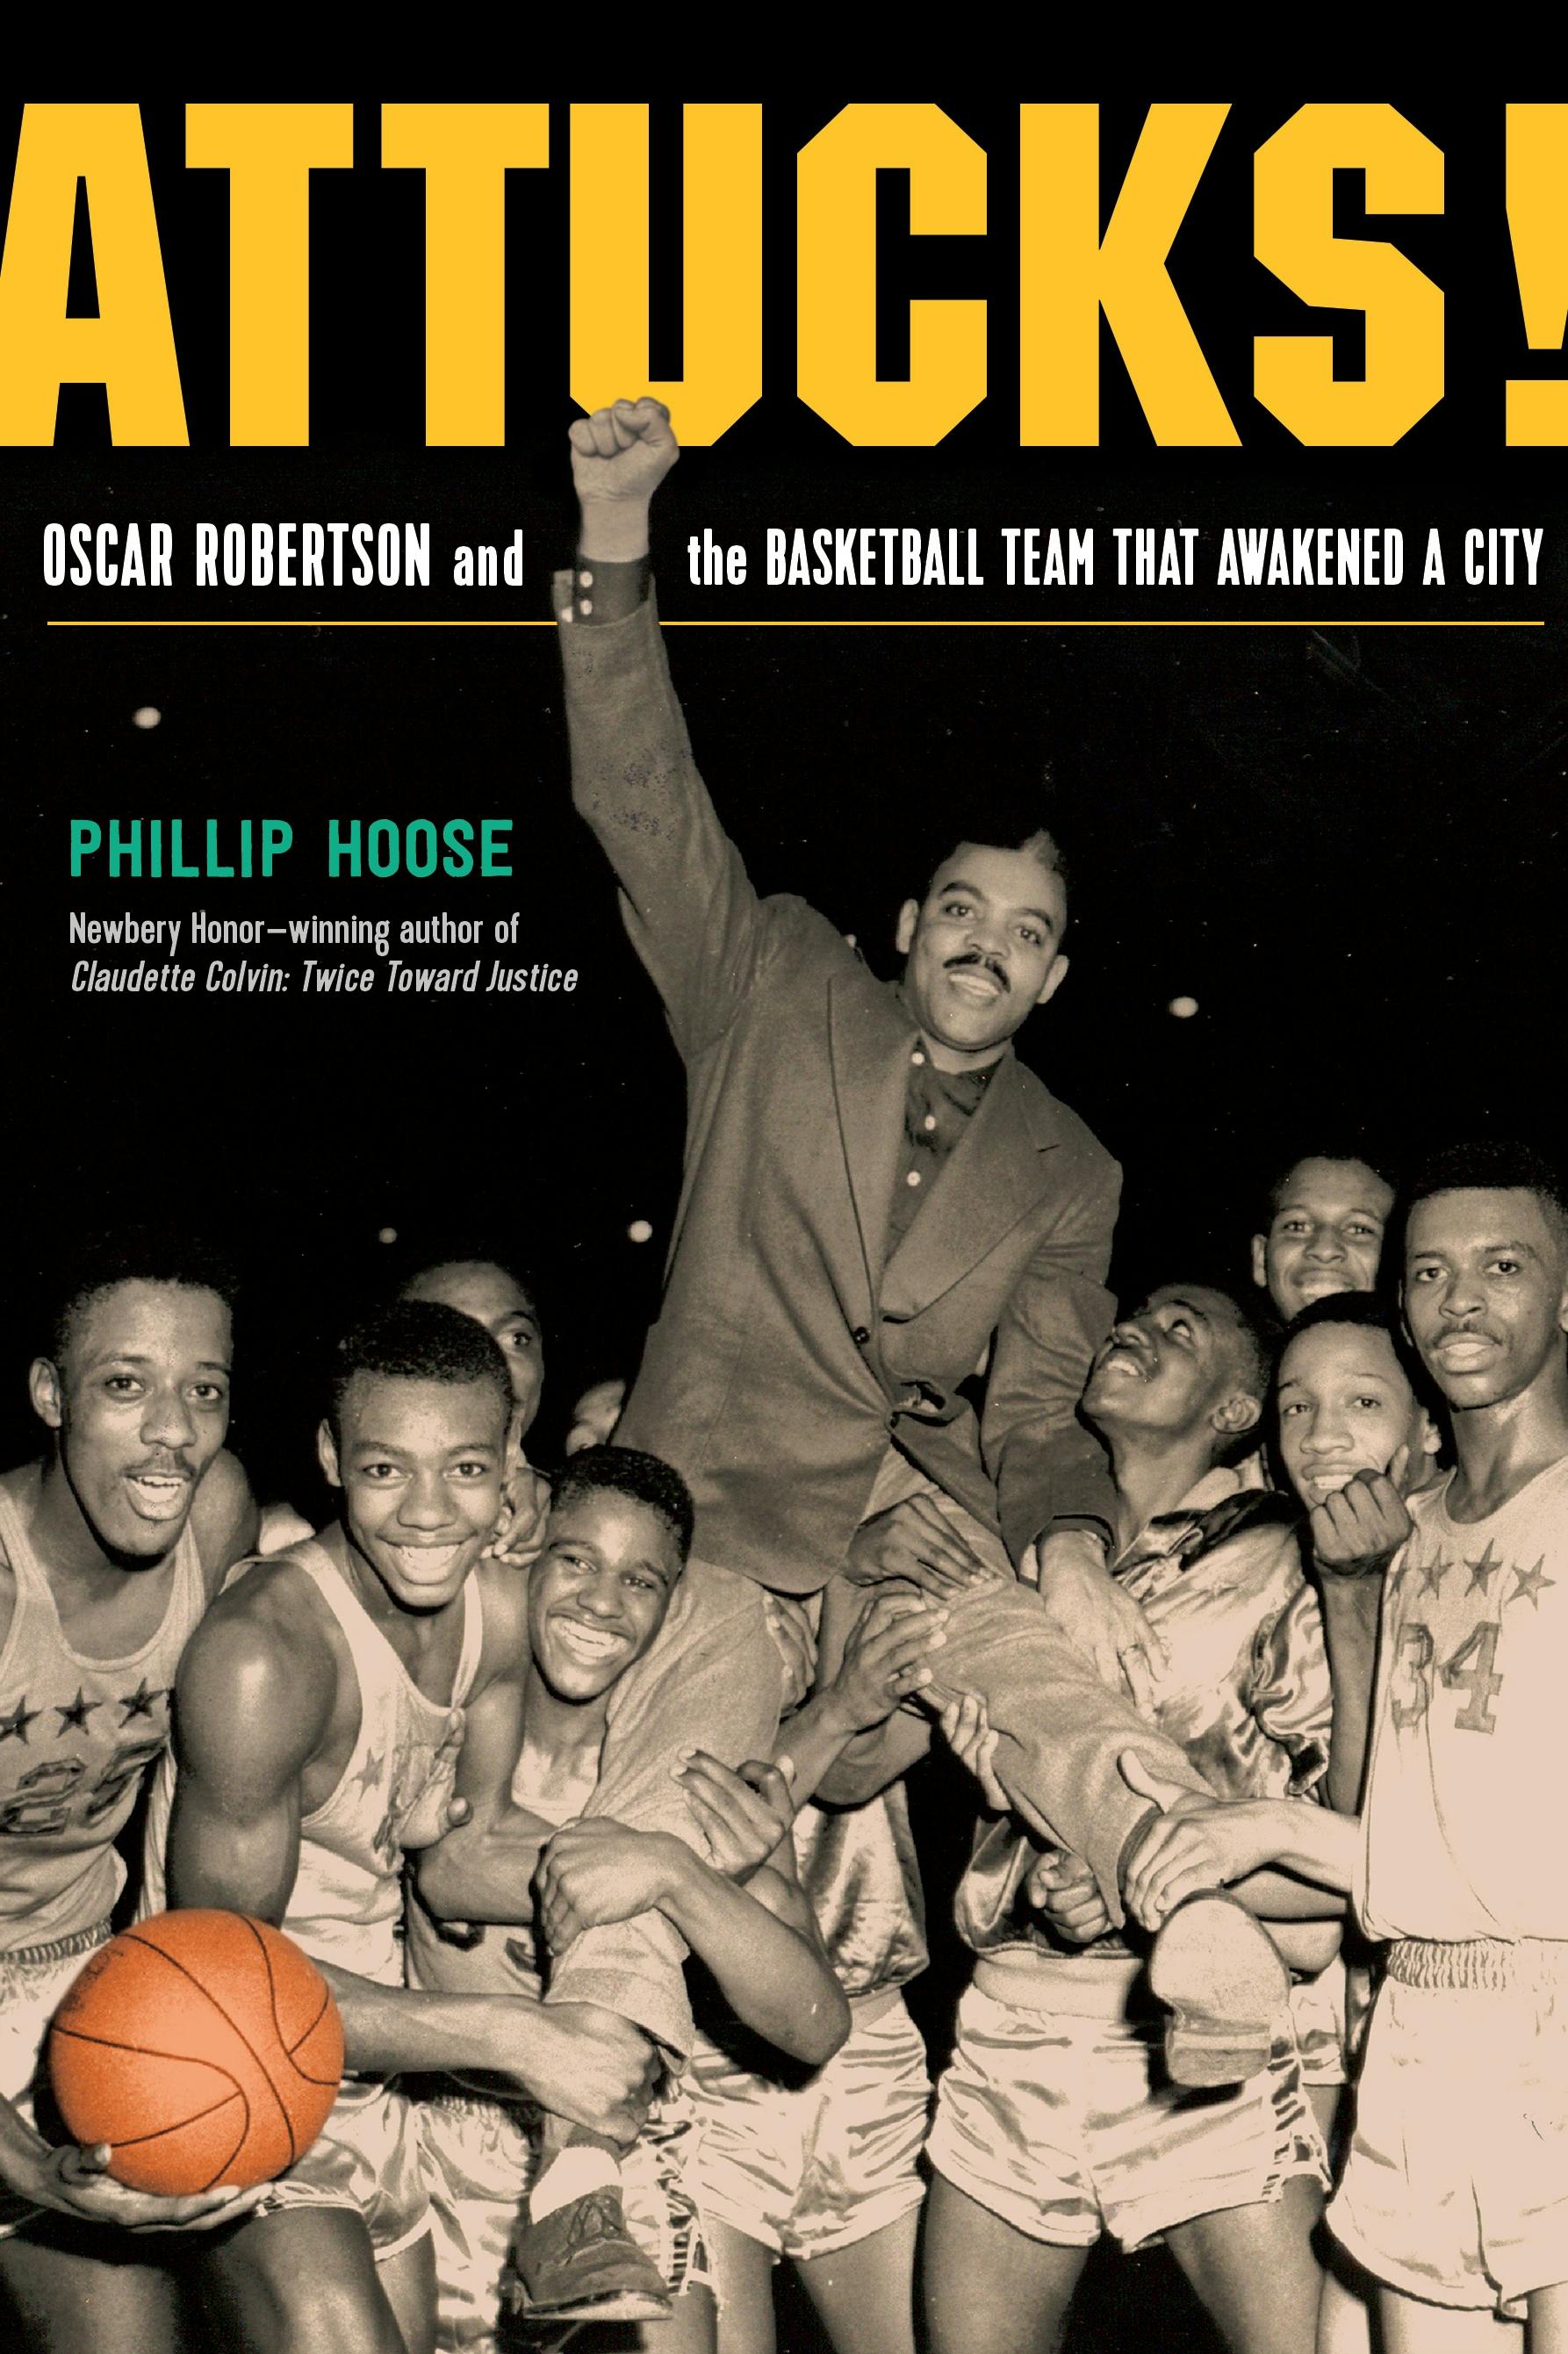 Oscar Robertson: African American basketball legend